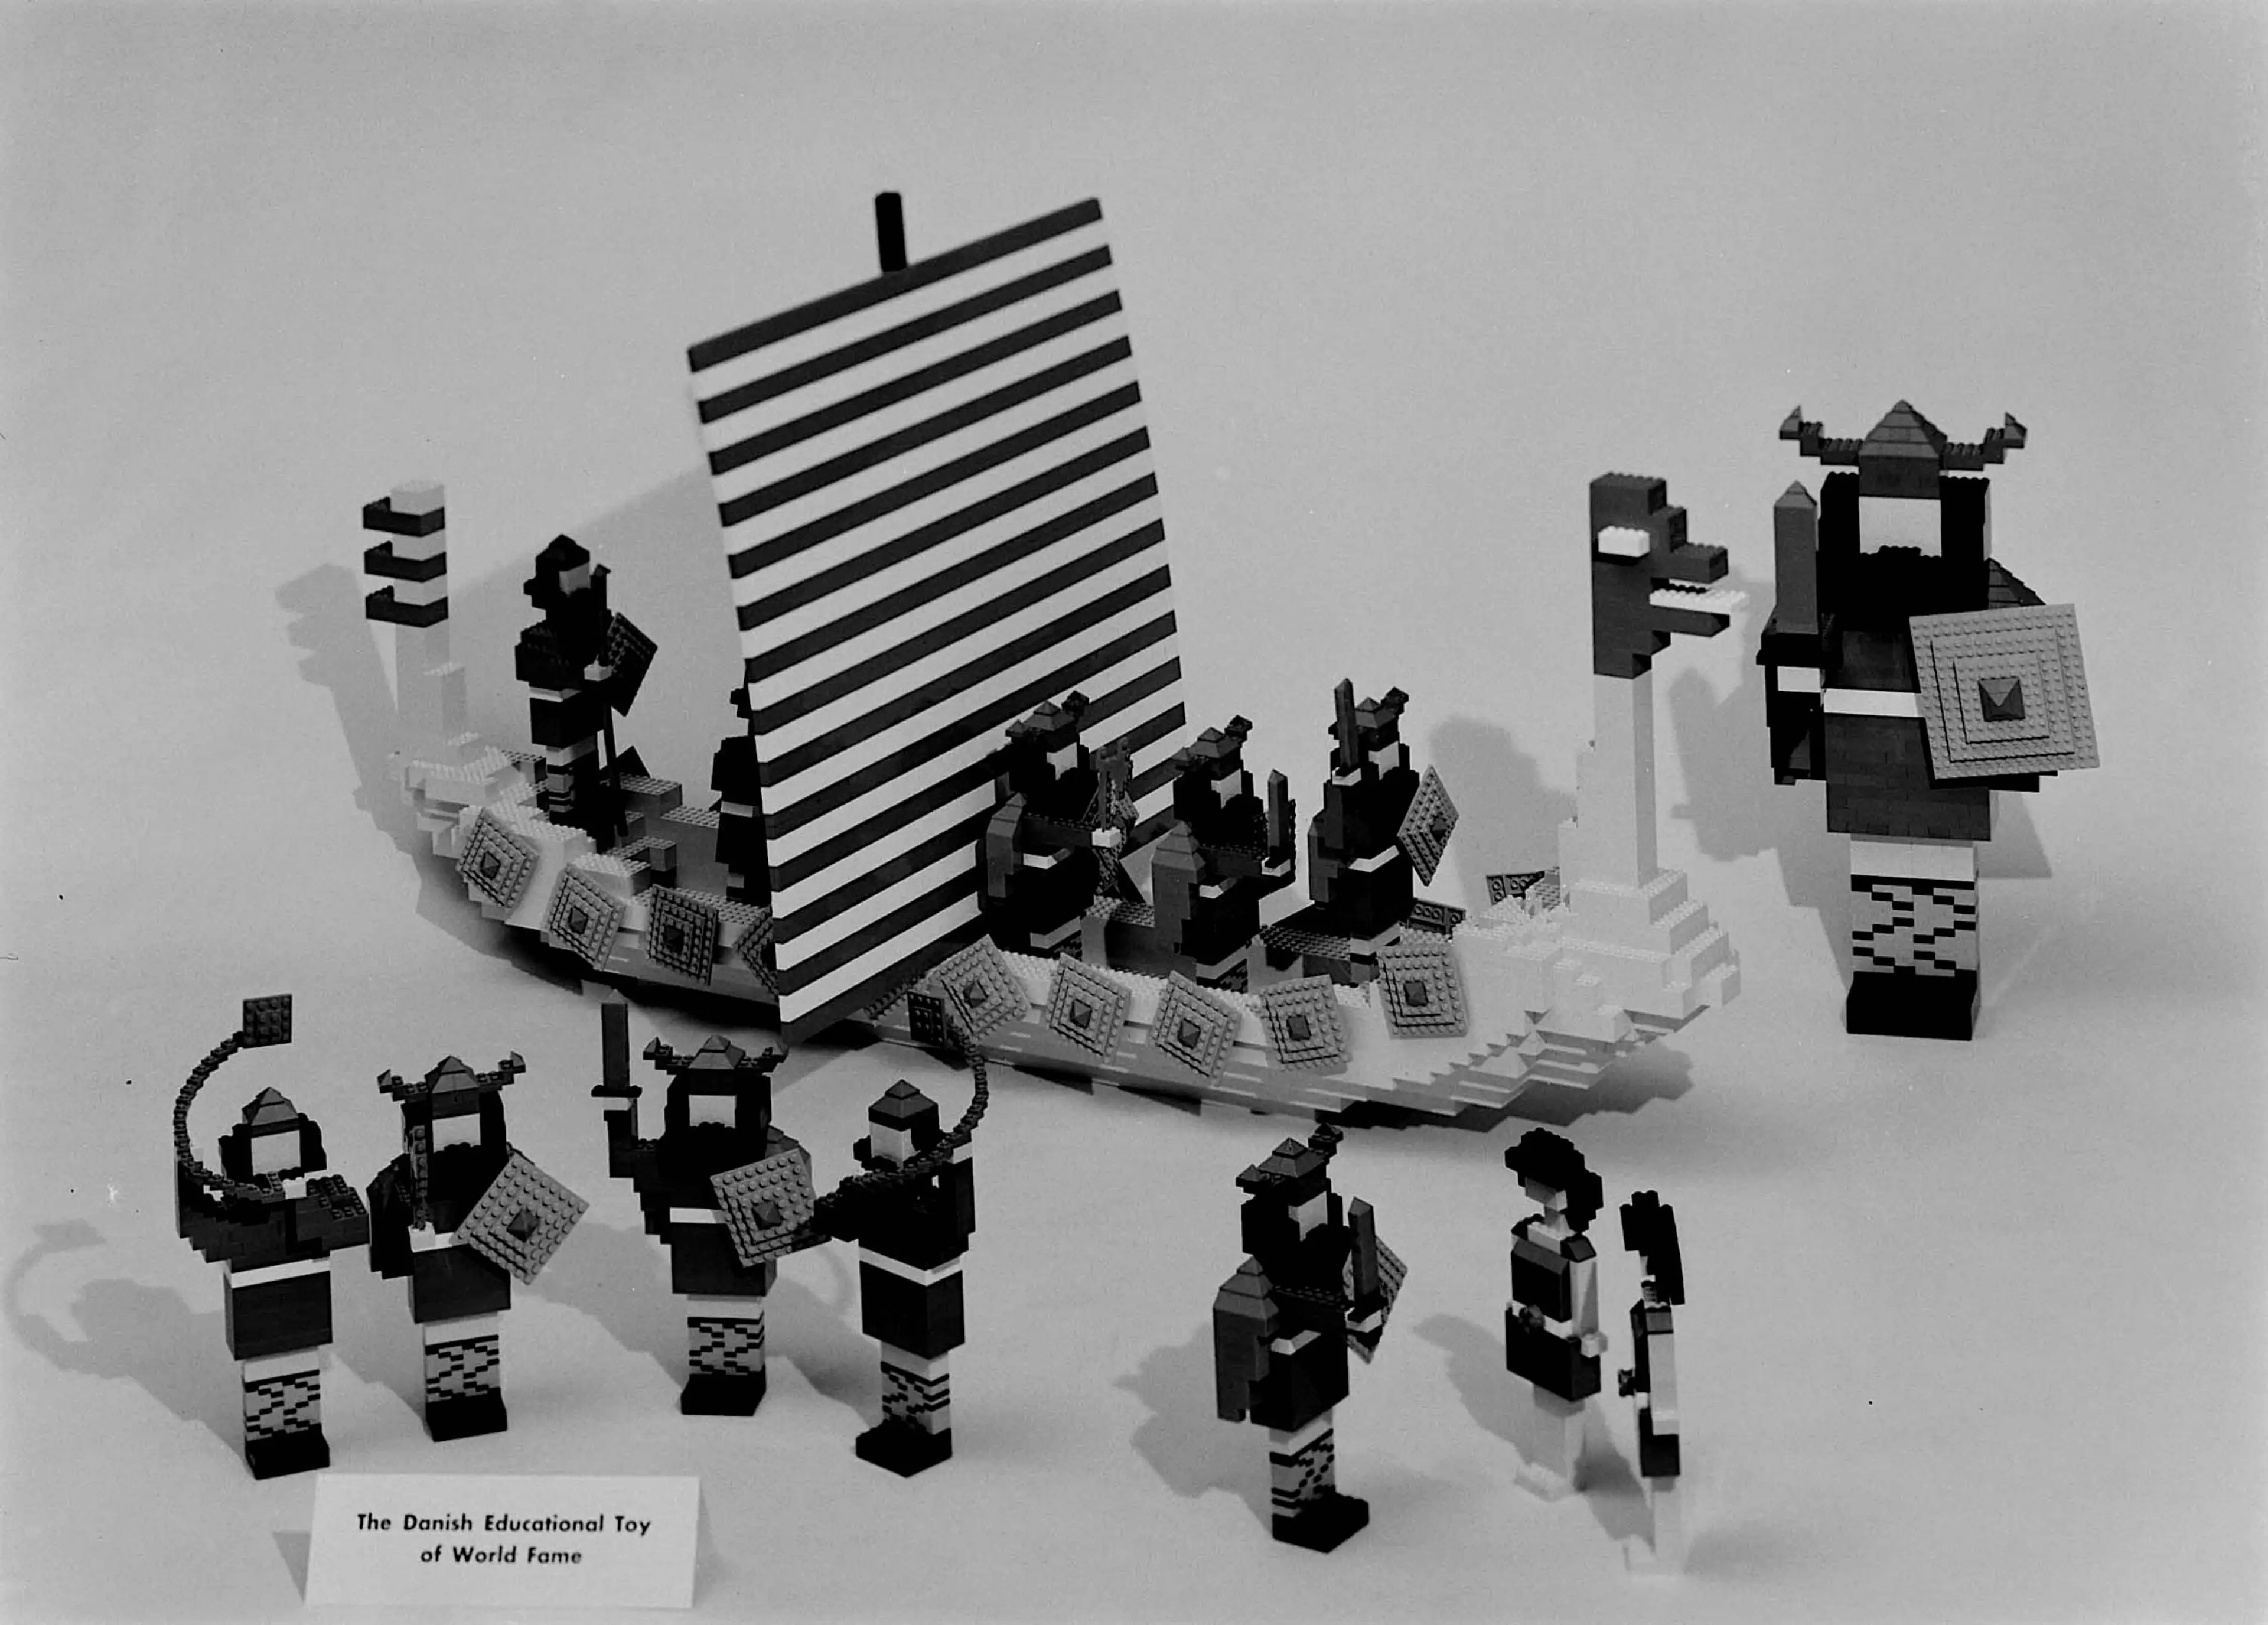 LEGO exhibition model